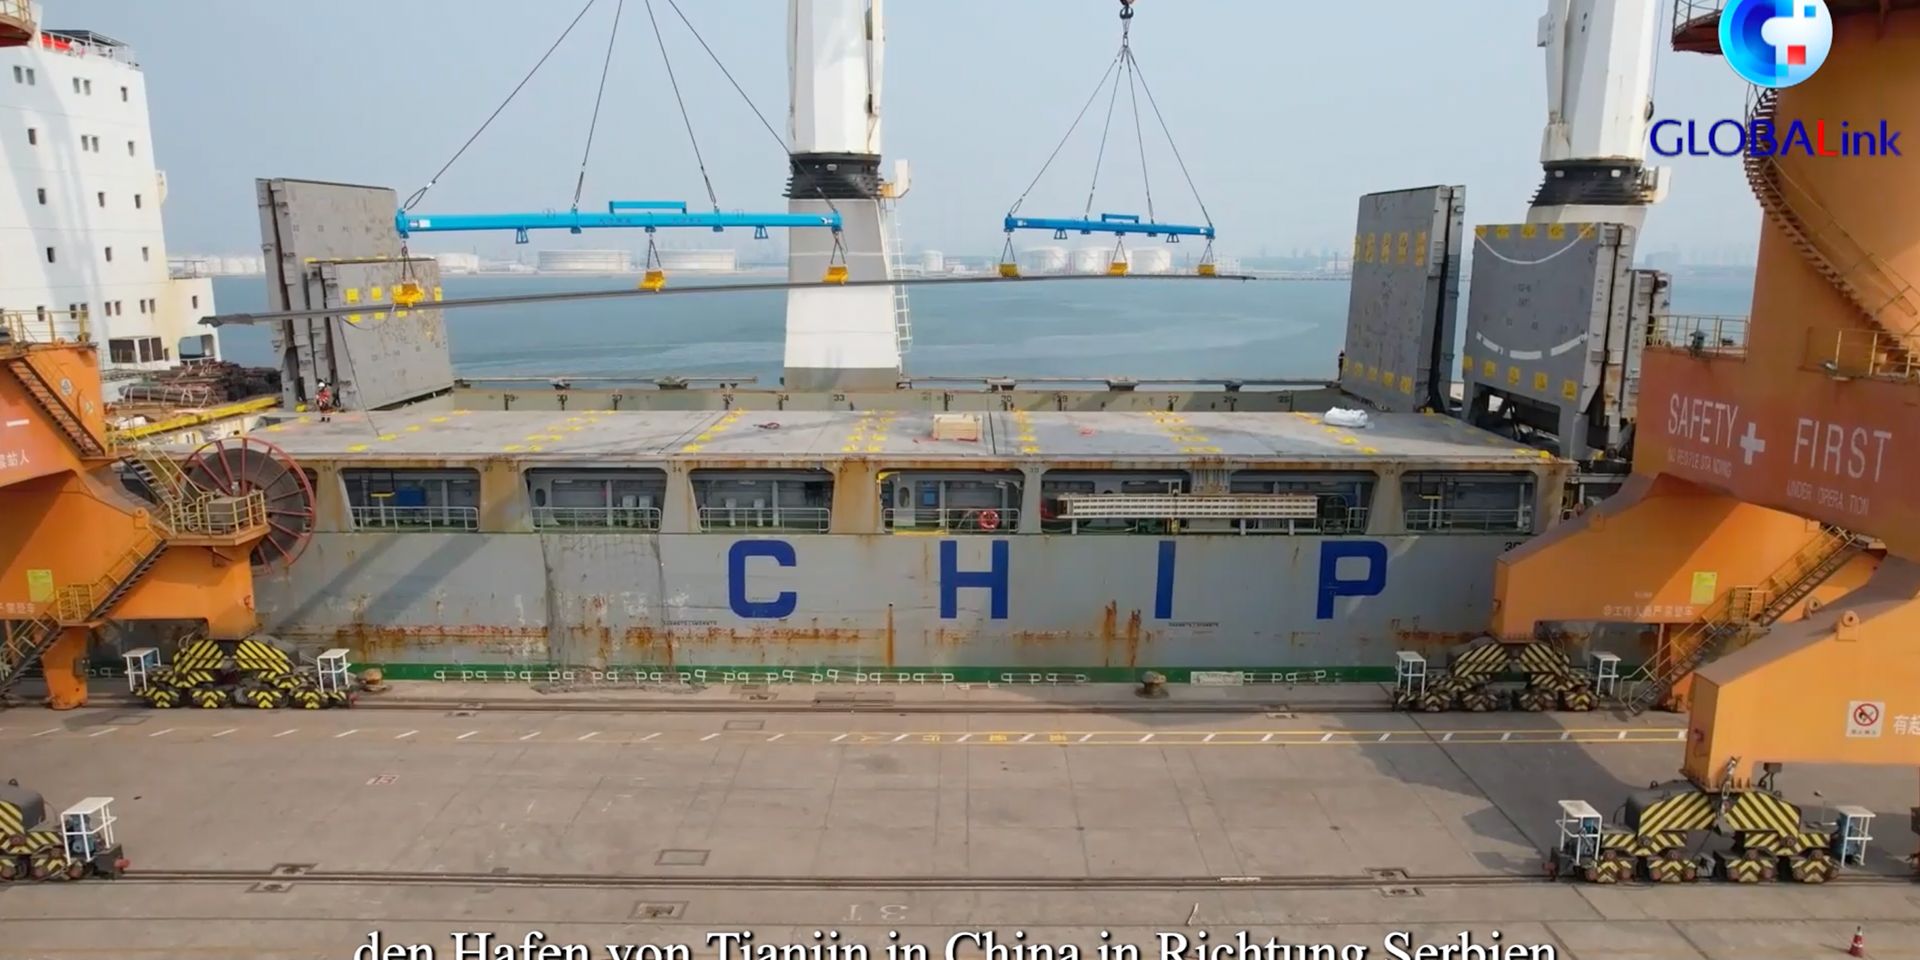 GLOBALink | China exportiert erstmals 50 Meter lange Stahlschienen nach Europa